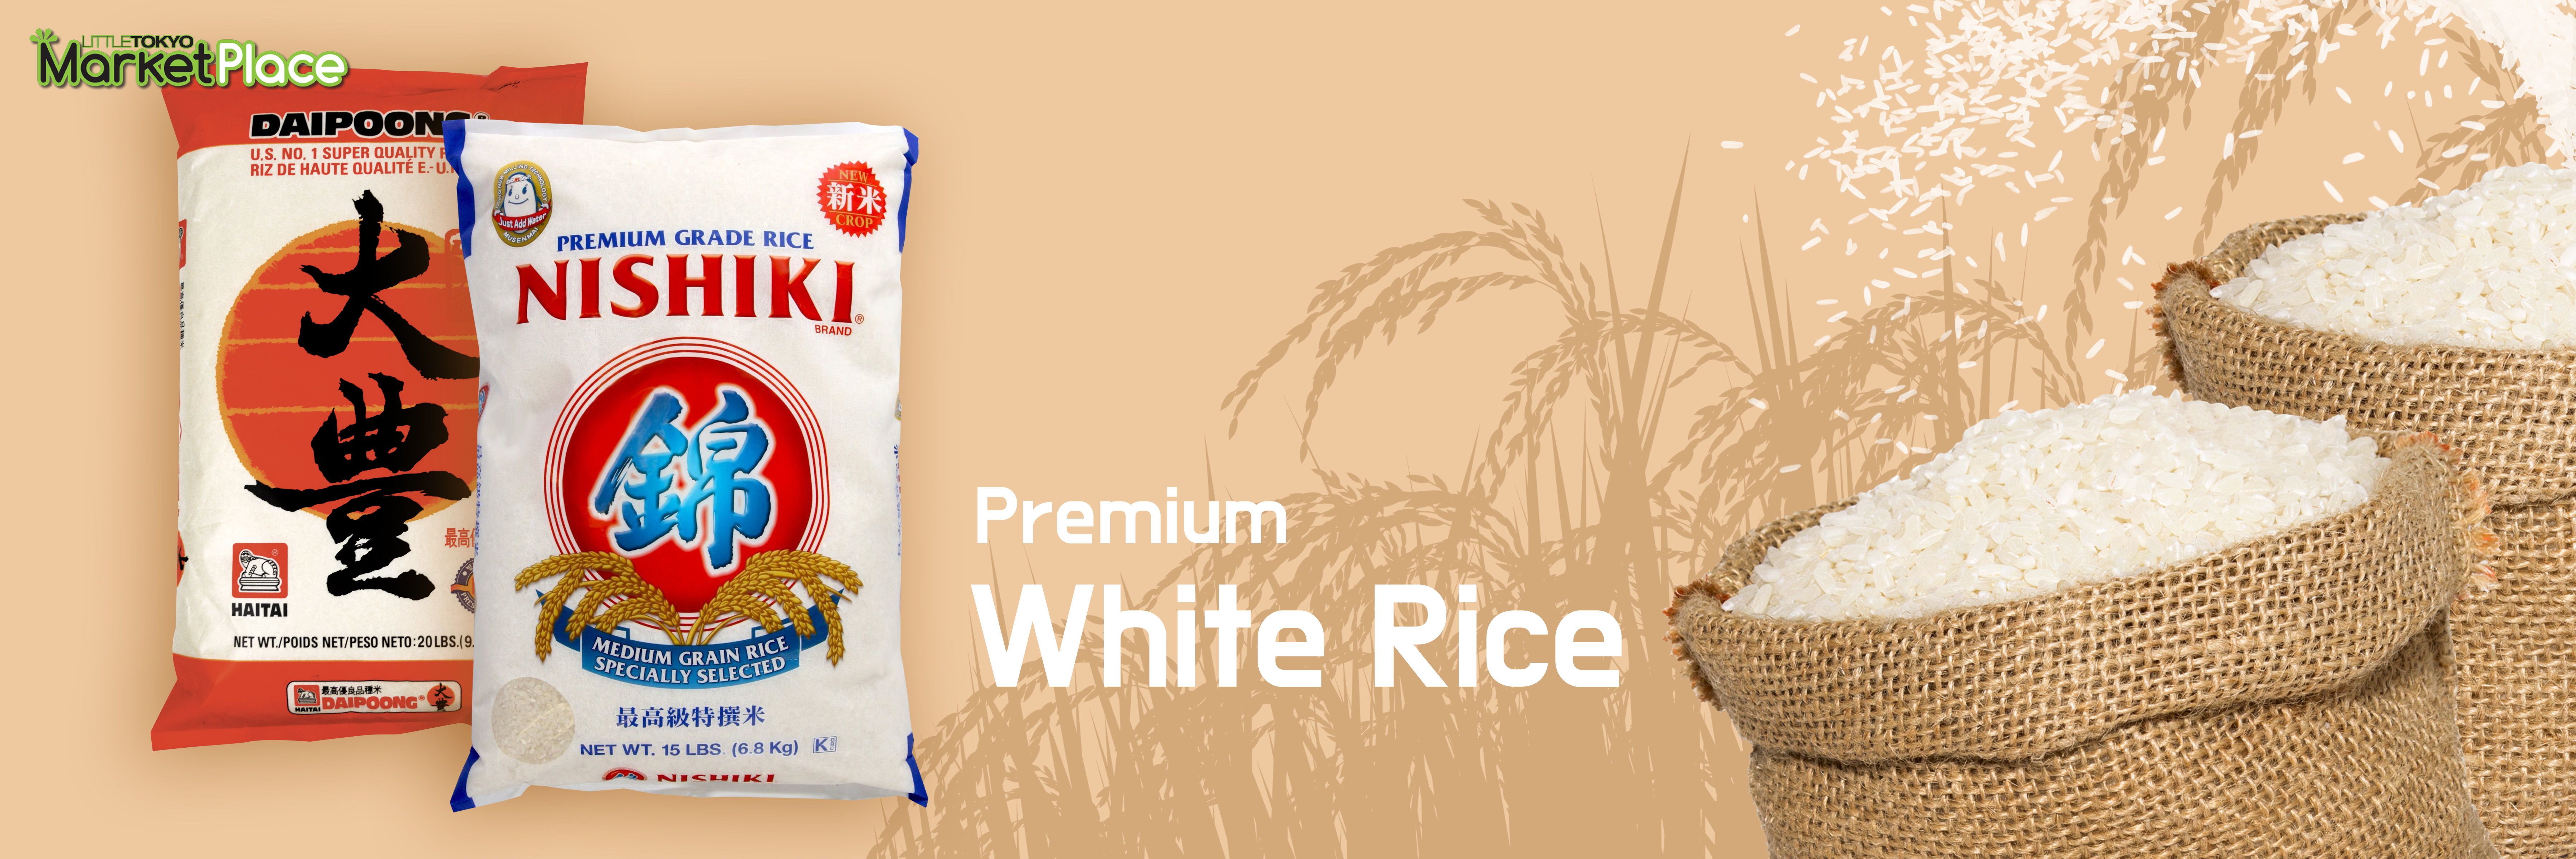 Premium White Rice r1.jpg